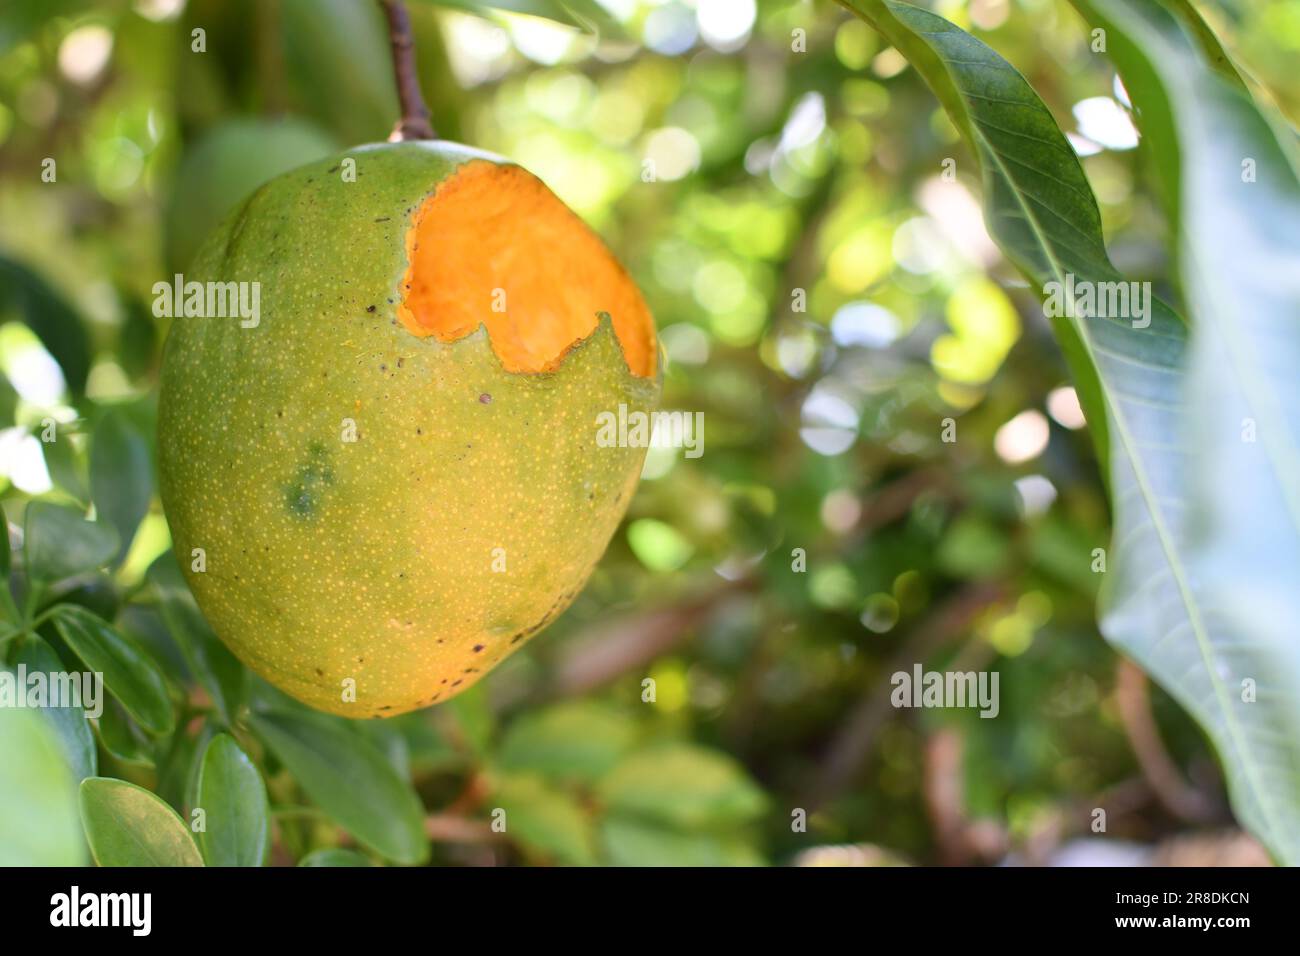 Mango half eaten by fruit rats on a branch of a tree. Pest destroying crops. Mango season problems. Stock Photo